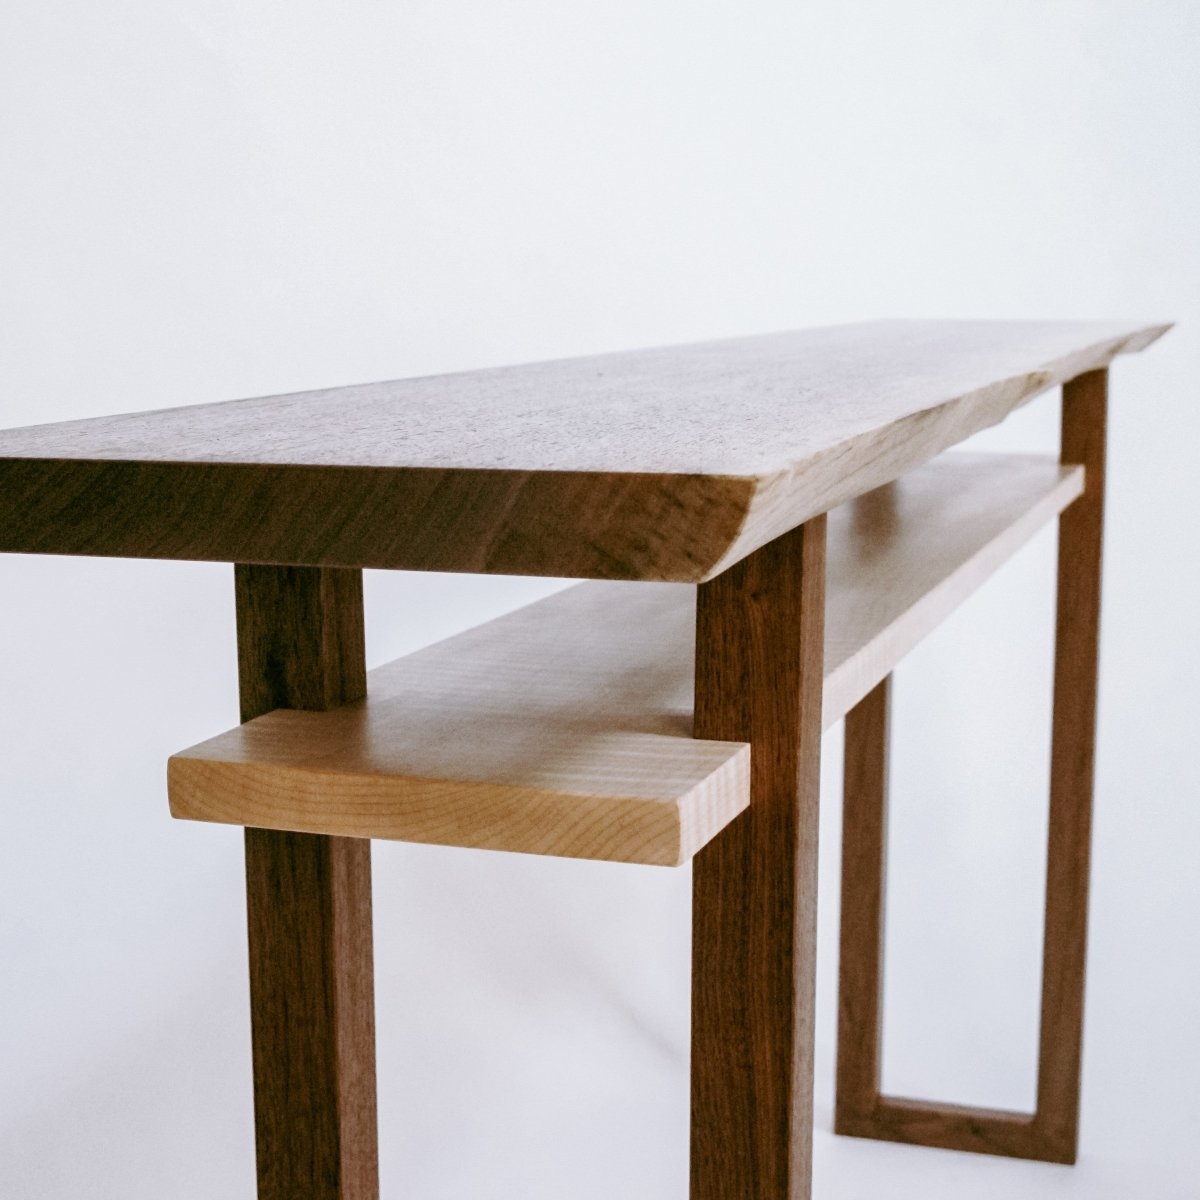 A live edge walnut modern wood console table by Mokuzai Furniture